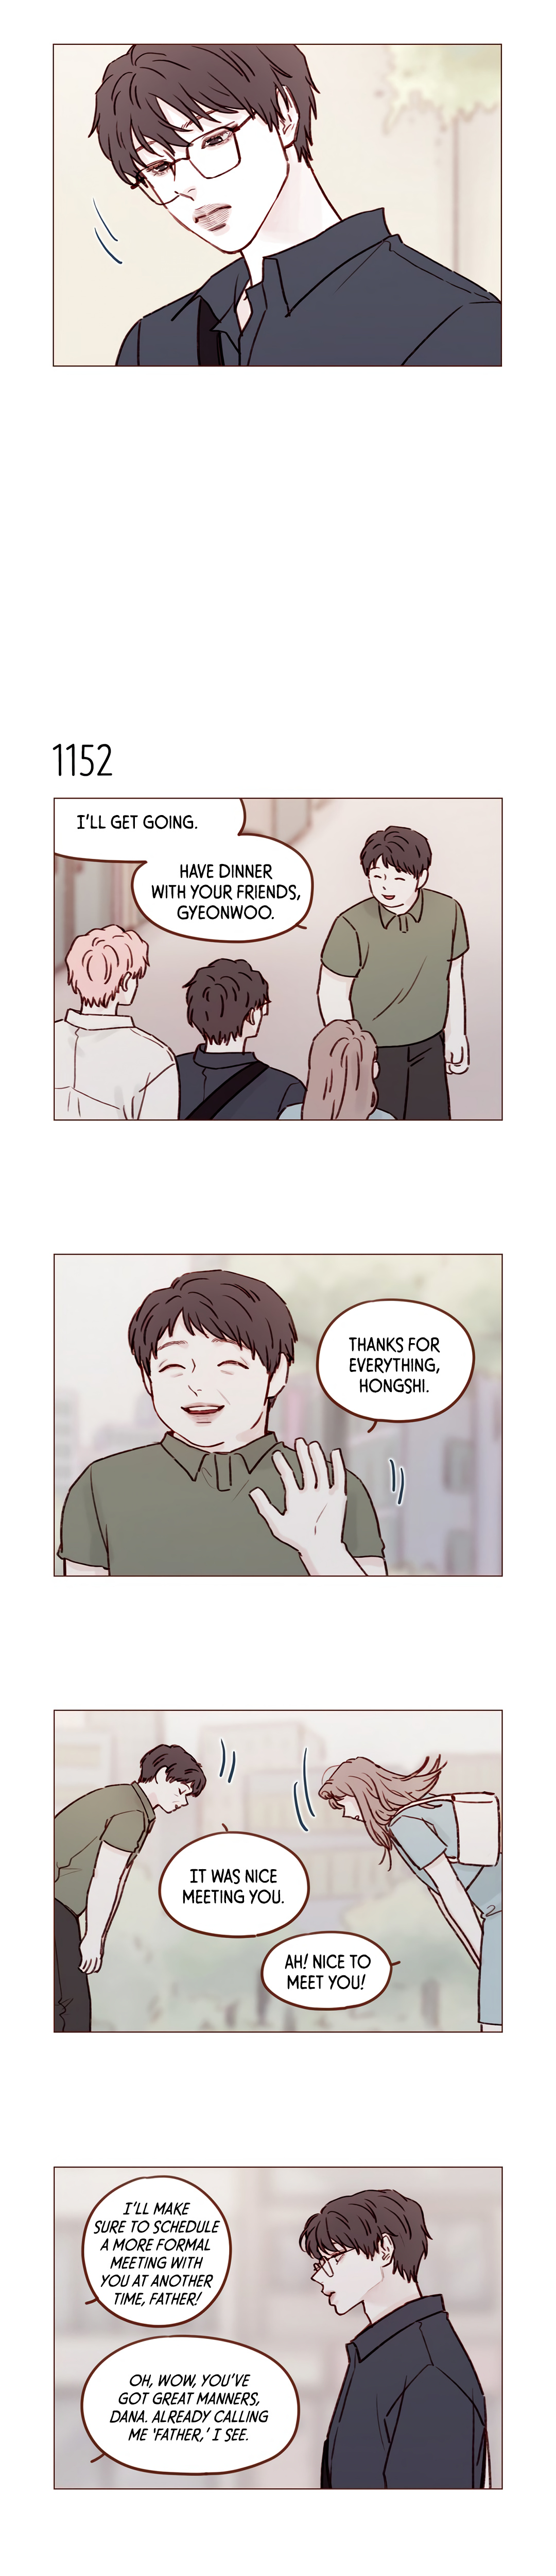 Hongshi Loves Me! - Page 4